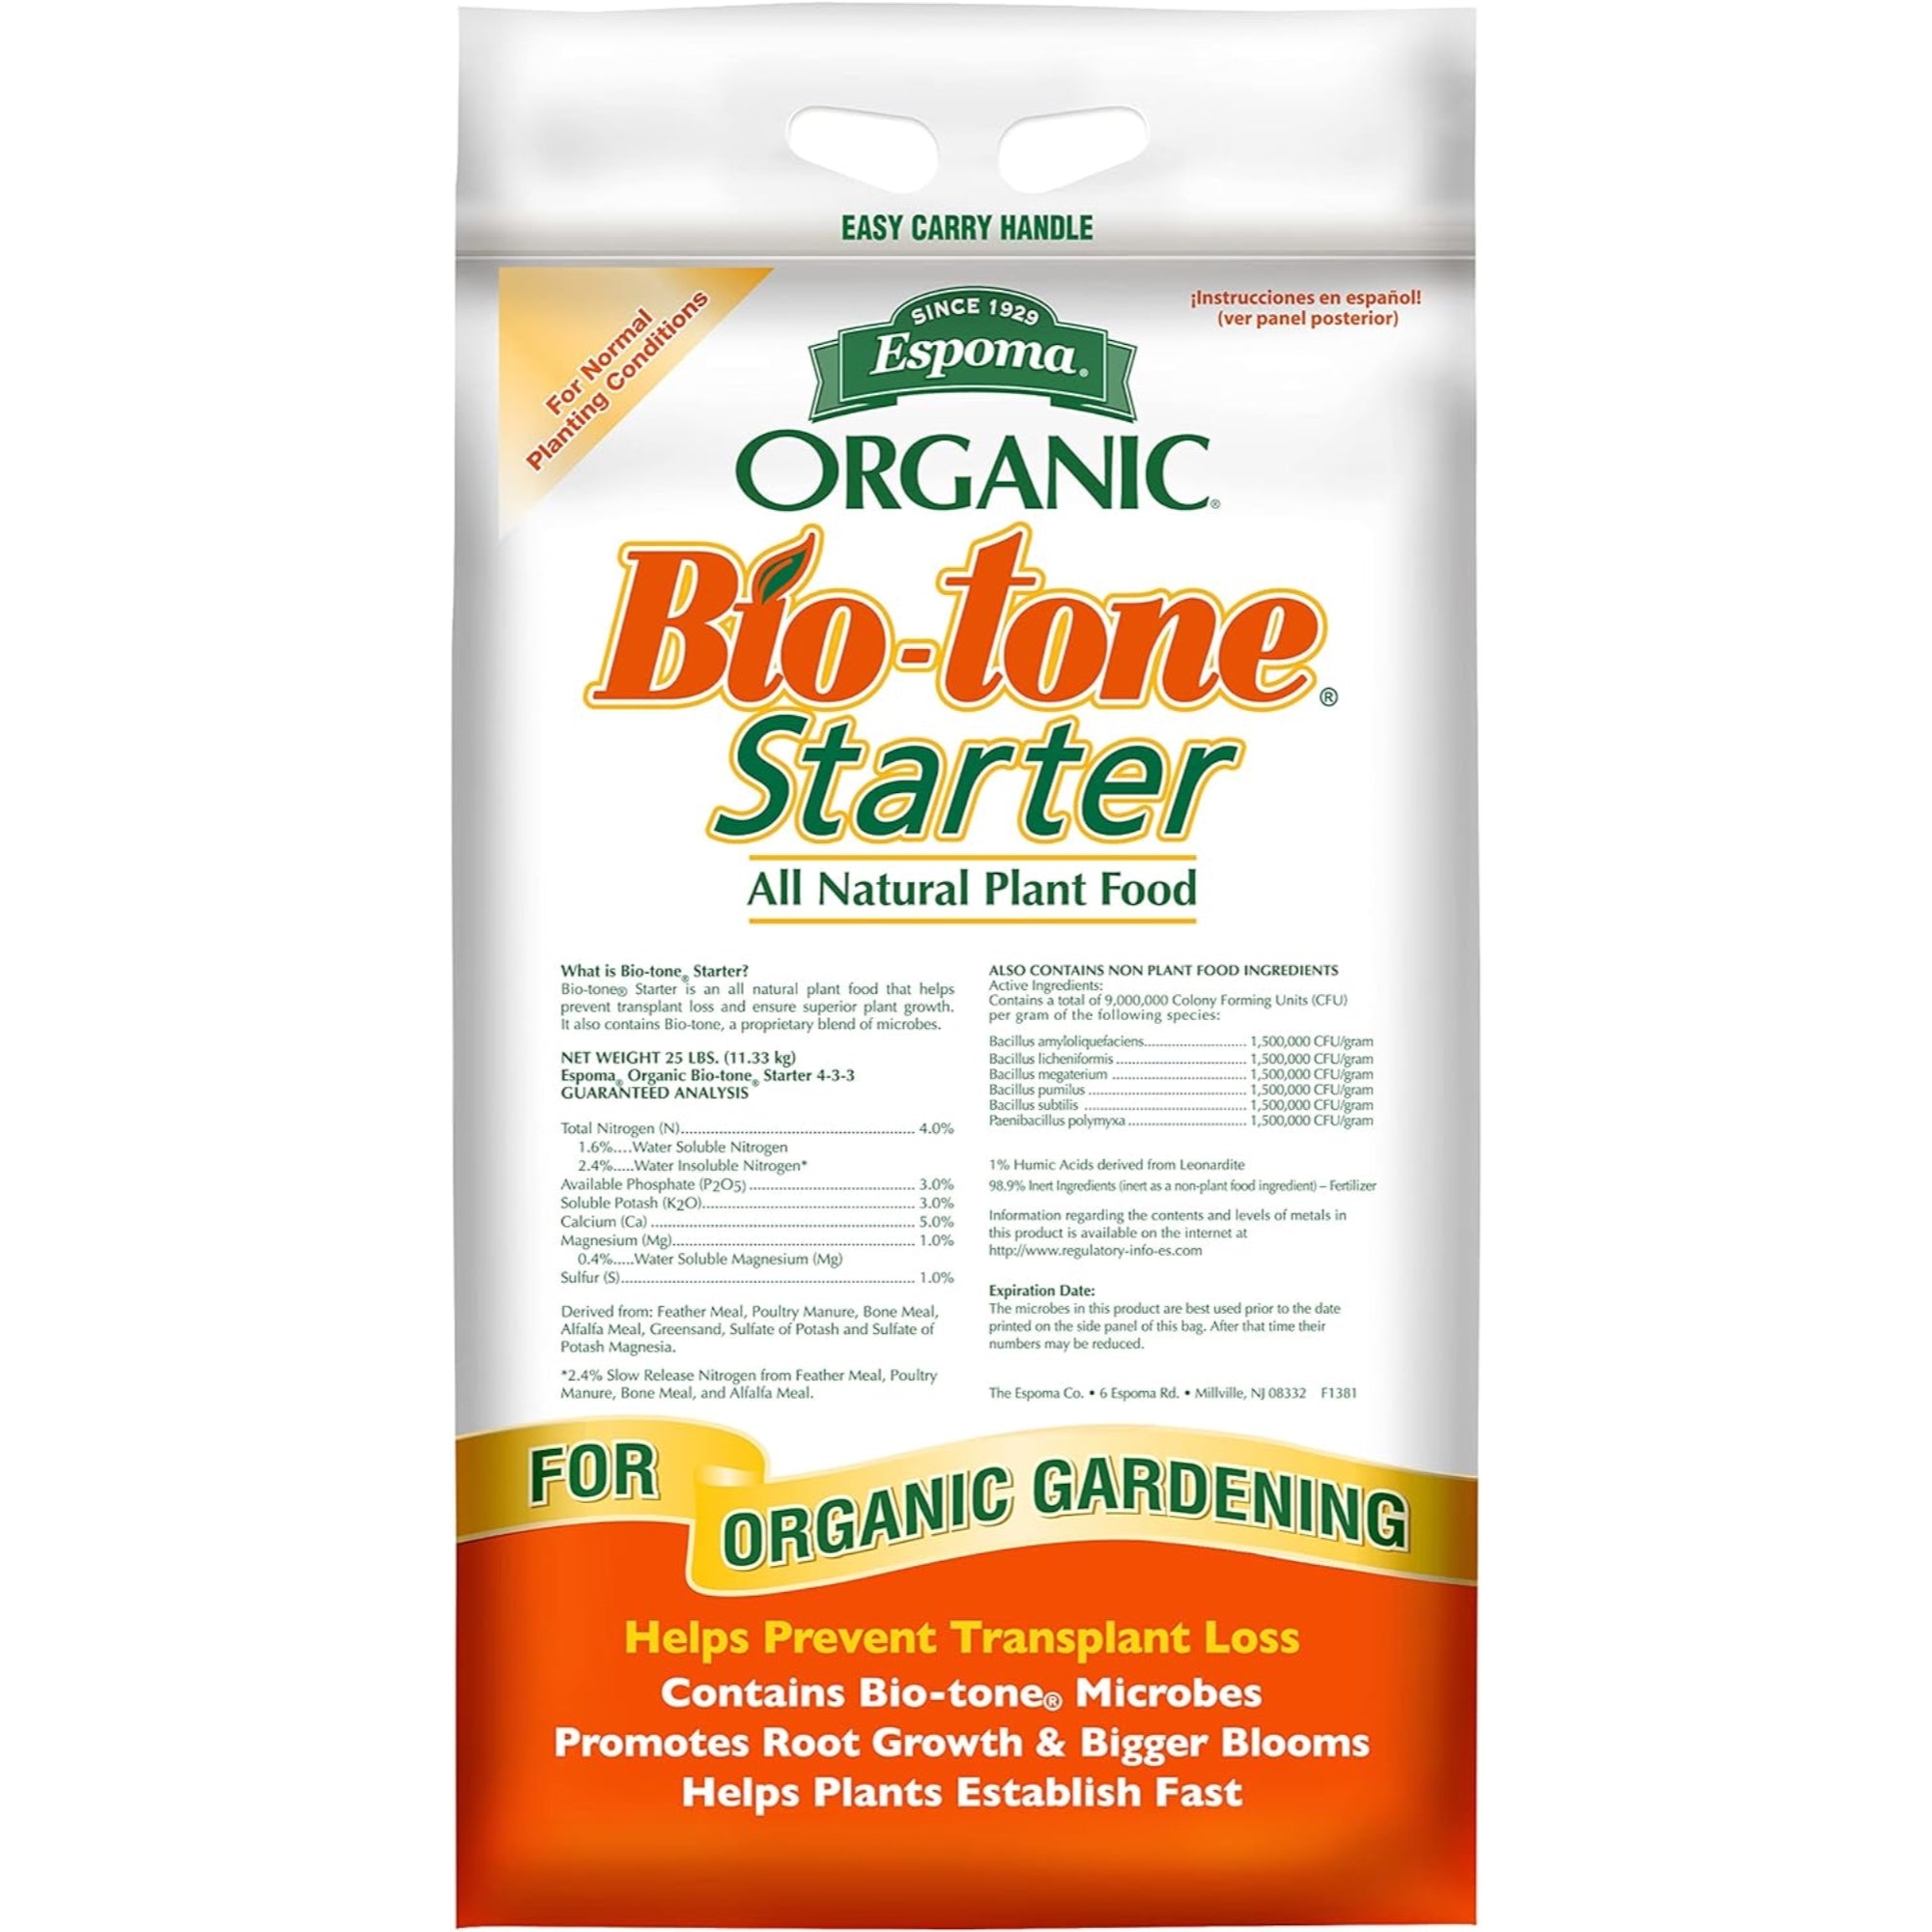 Espoma Organic Bio-tone Starter All-Natural Plant Food for Organic Gardening, Prevents Transplant Loss, 25lbs